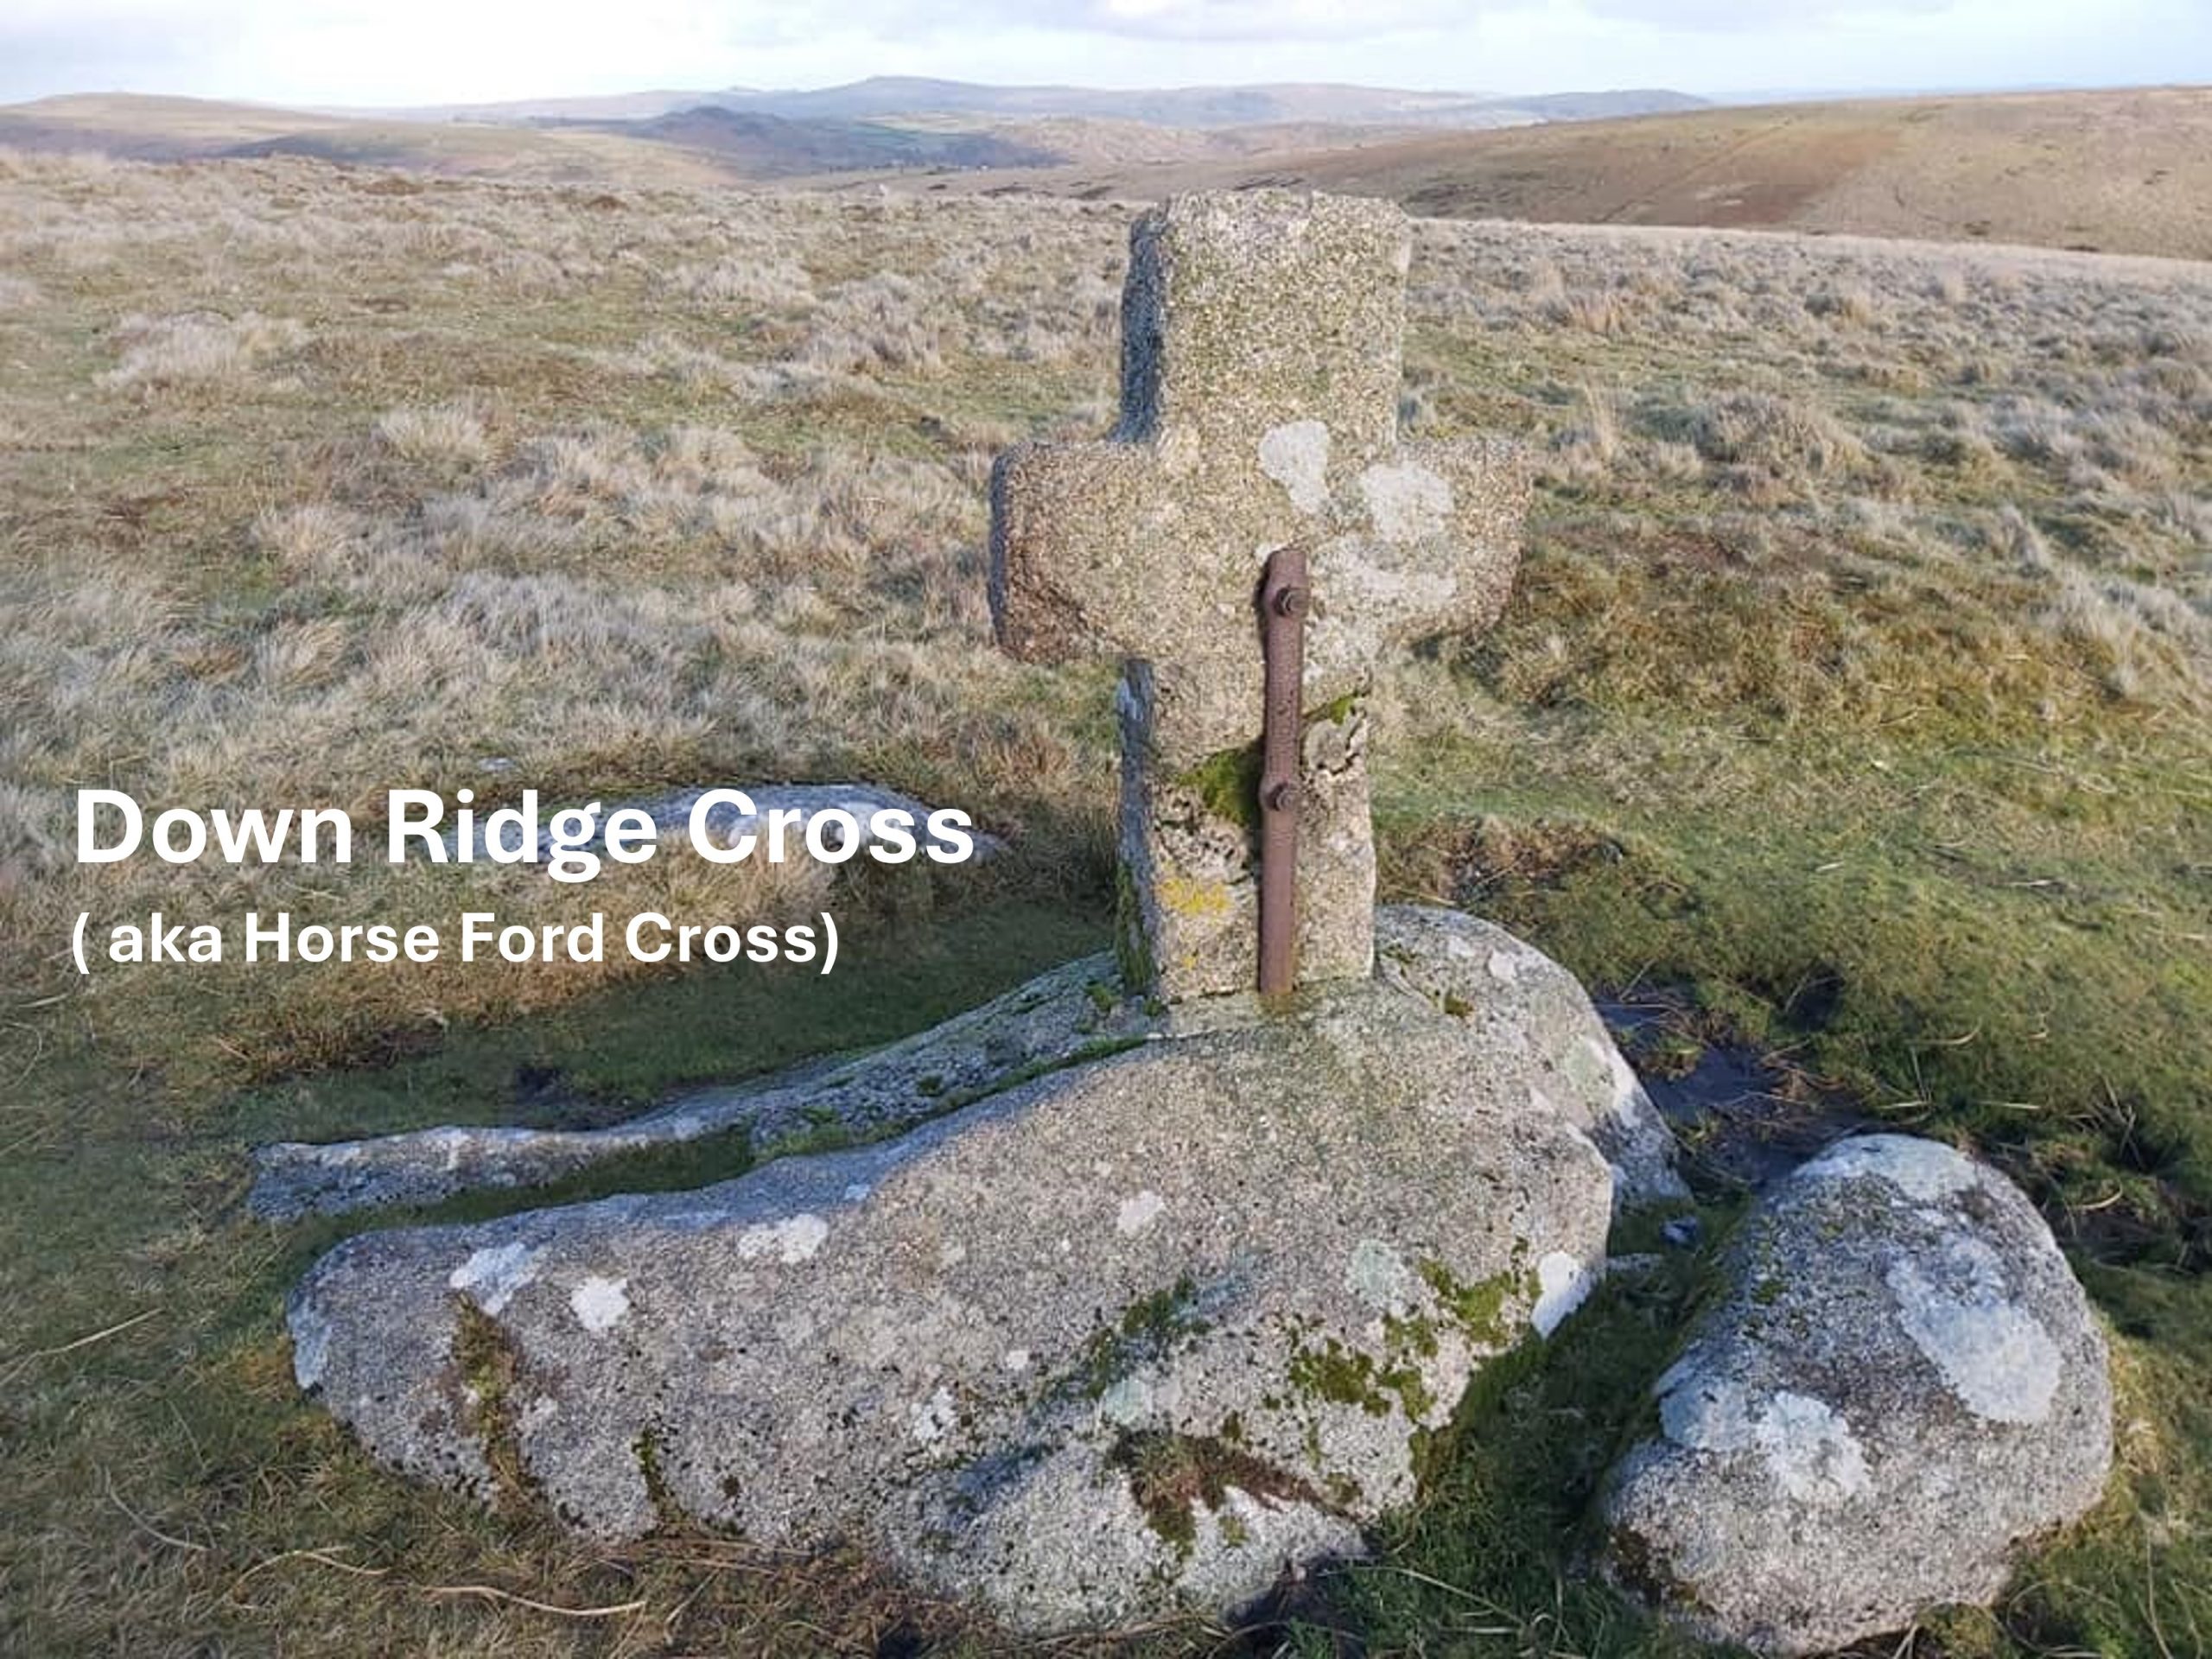 3. Down Ridge Cross